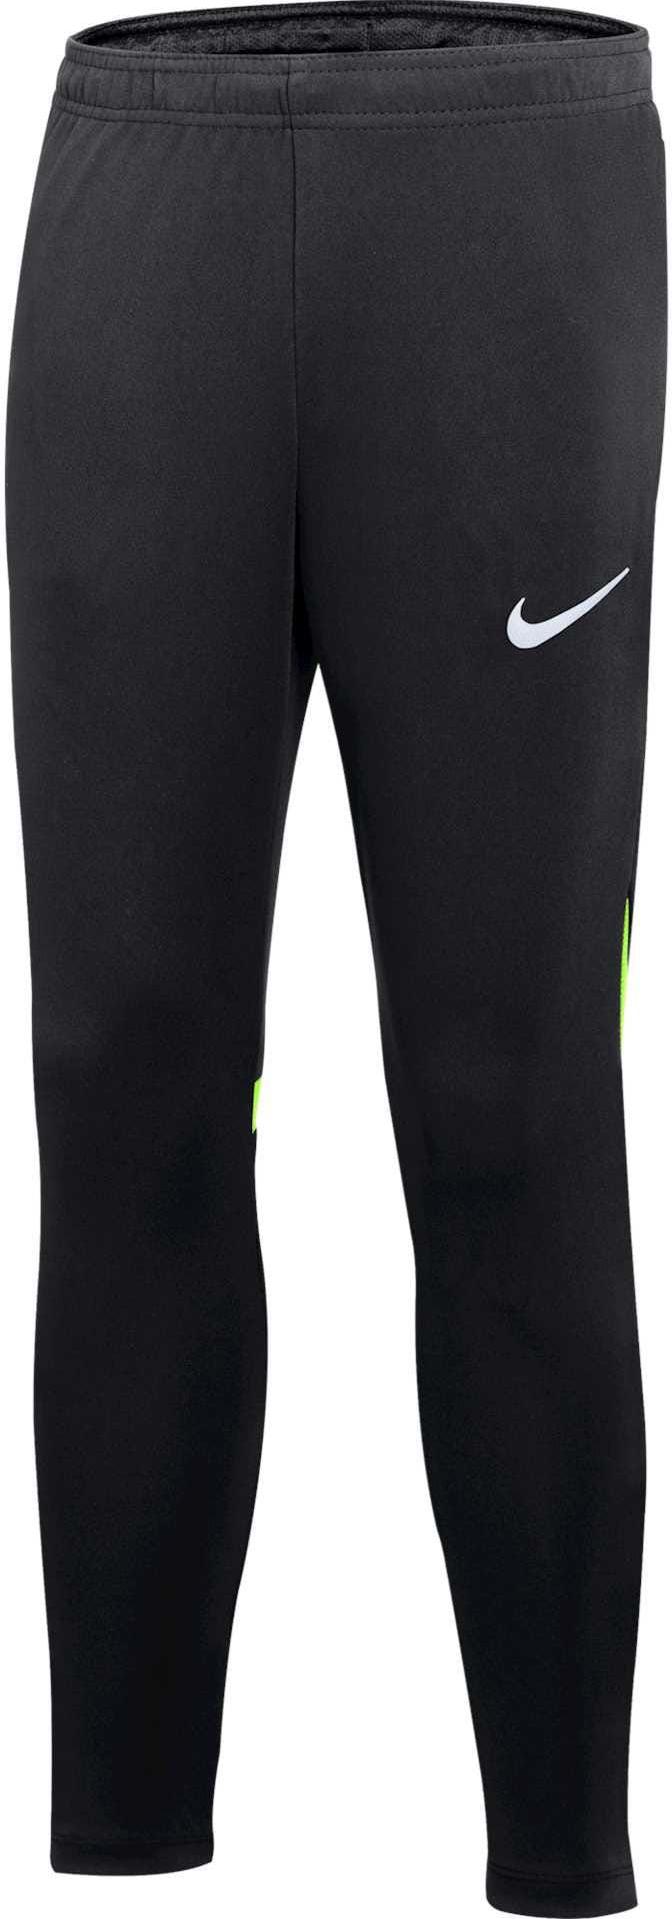 Calças Nike Academy Pro Pant Youth